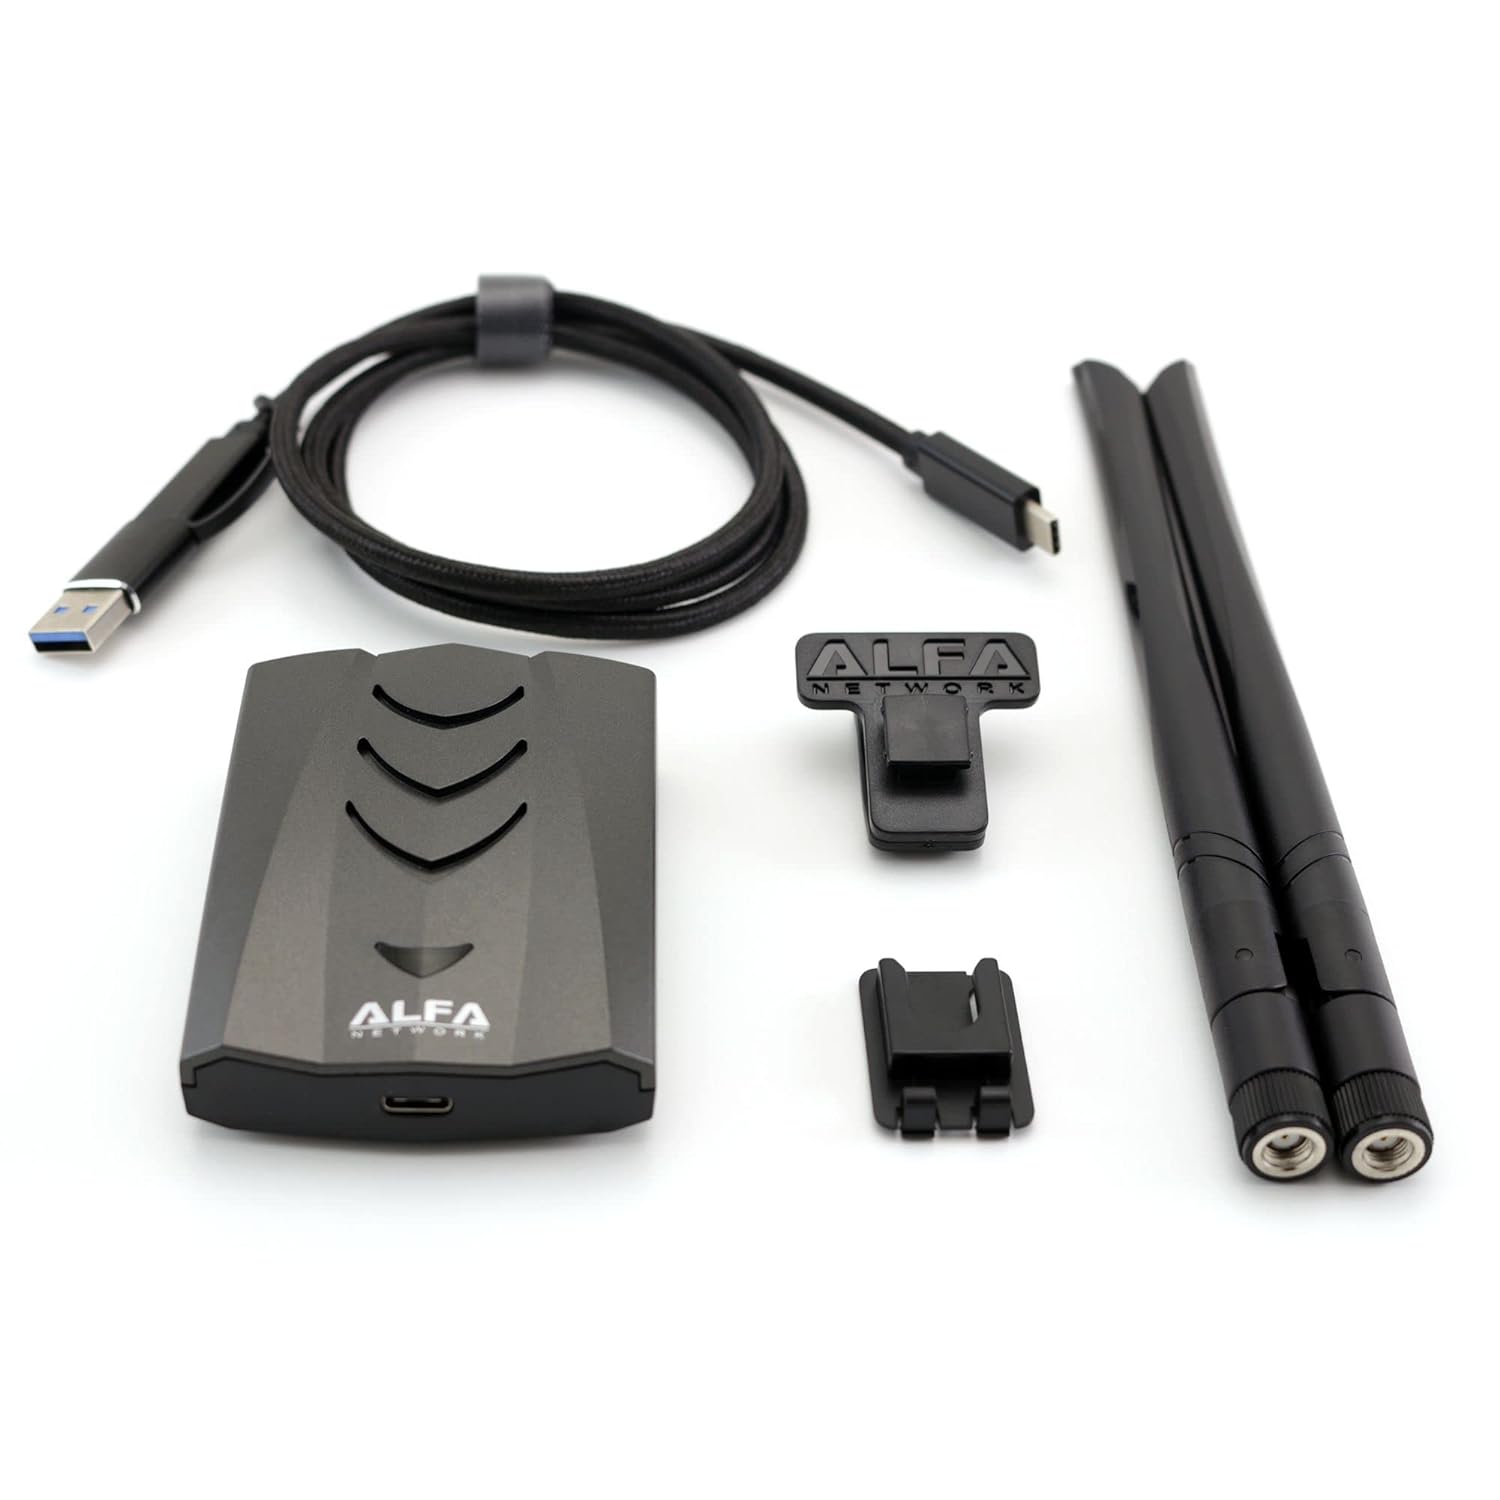 ALFA Network Long-Range Dual-Band AC1200 Wireless USB 3.0 Wi-Fi Adapter w/2x 5dBi External Antennas - 2.4GHz 300Mbps/5GHz 867Mbps - 802.11ac & A, B, G, N